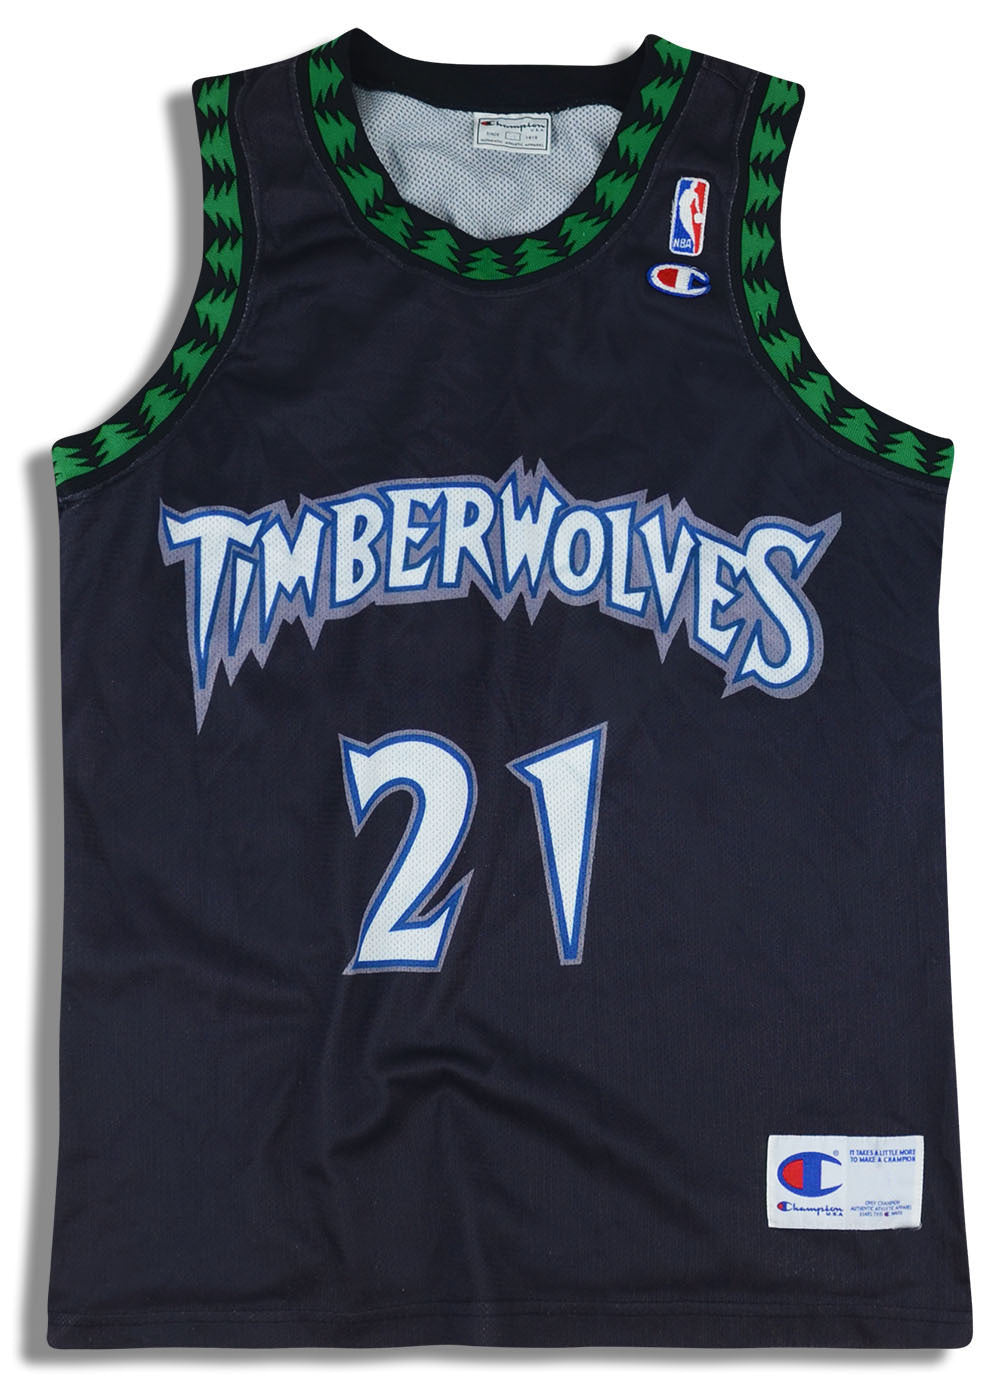 timberwolves jersey